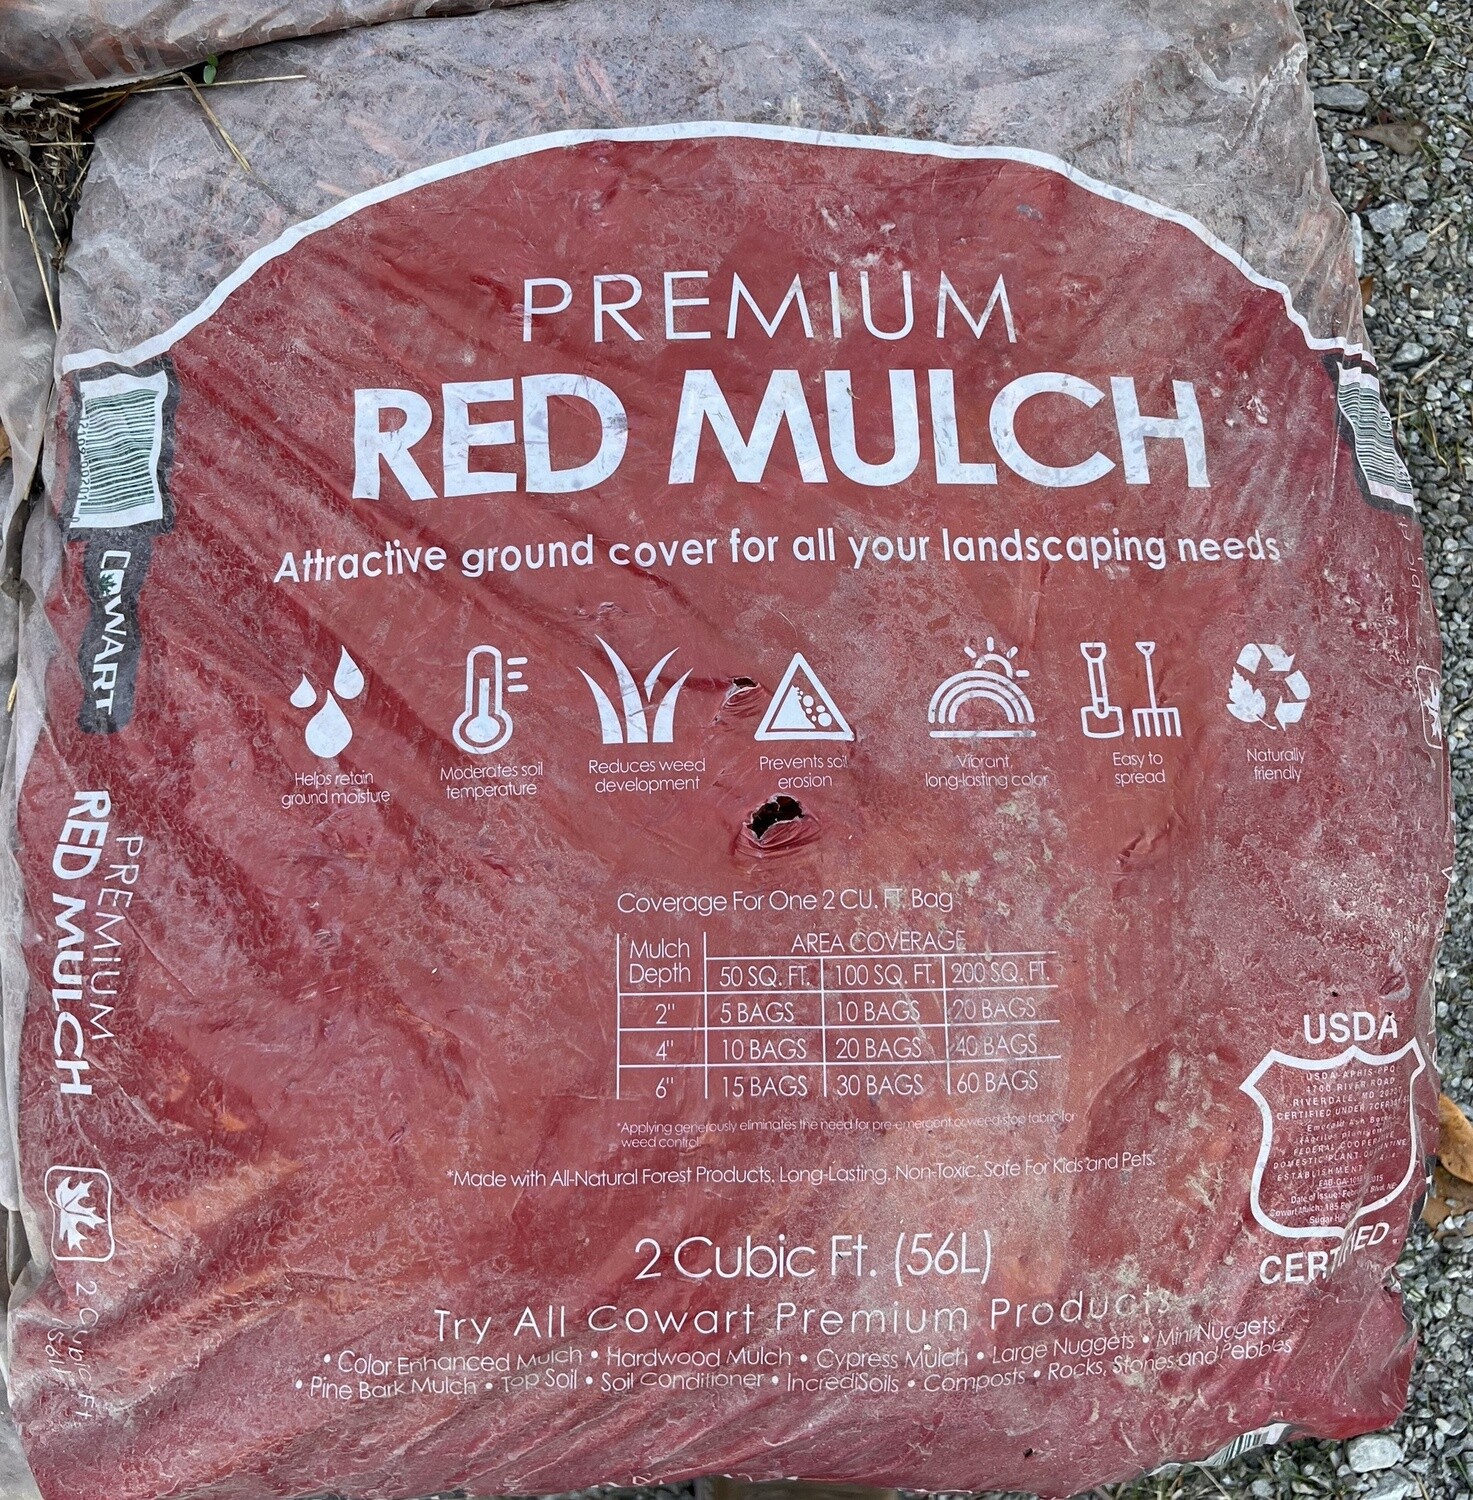 Bagged Red Mulch